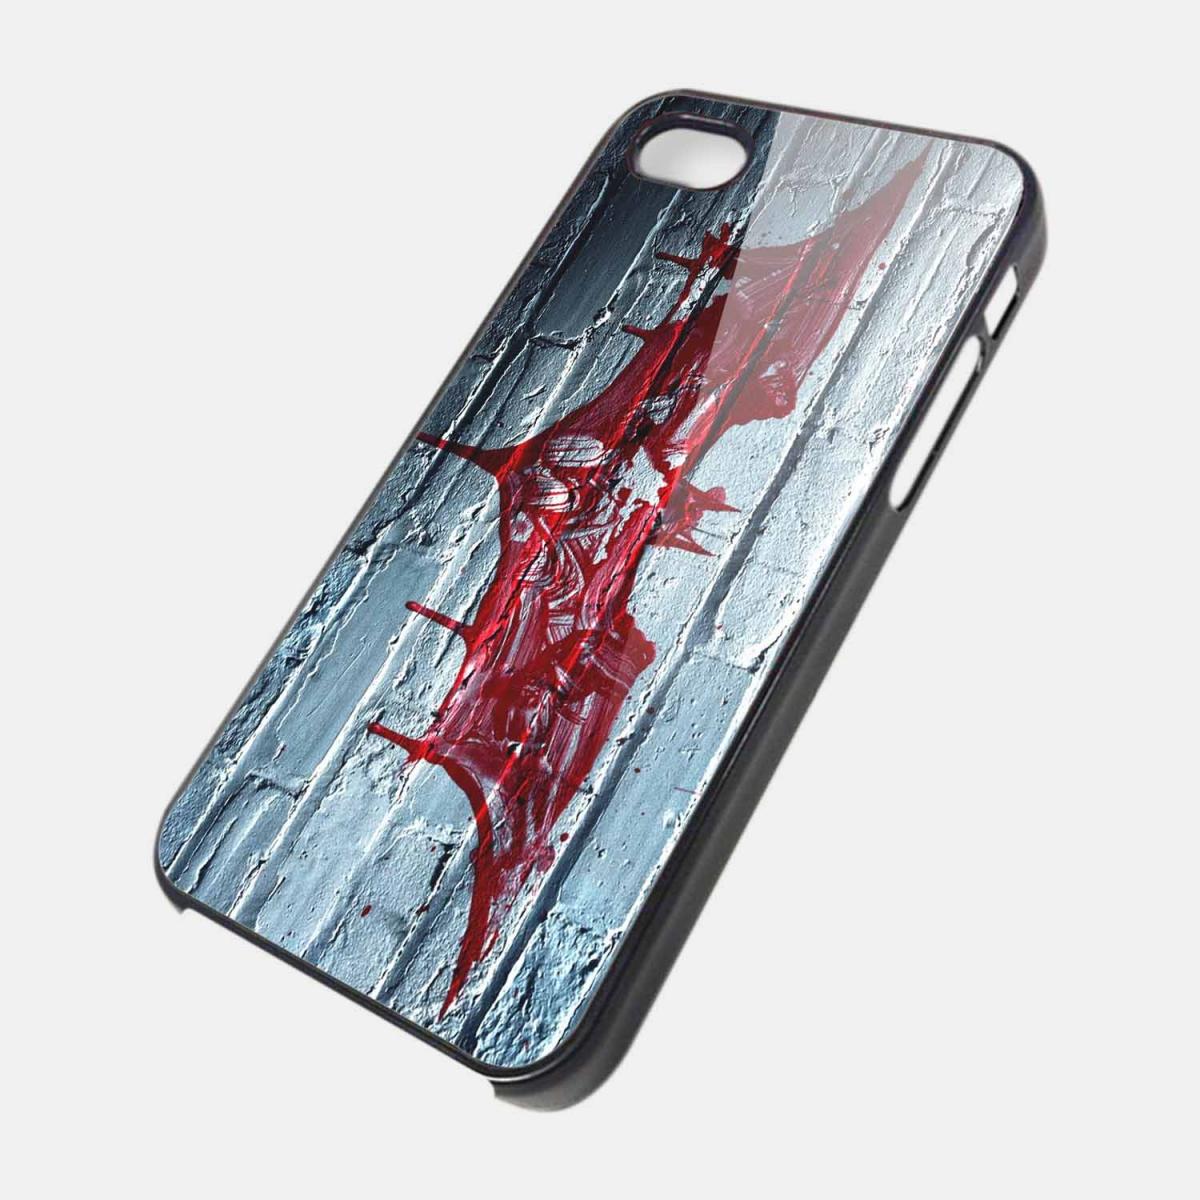 Batman Superhero Special Design Iphone 5 Black Case Cover